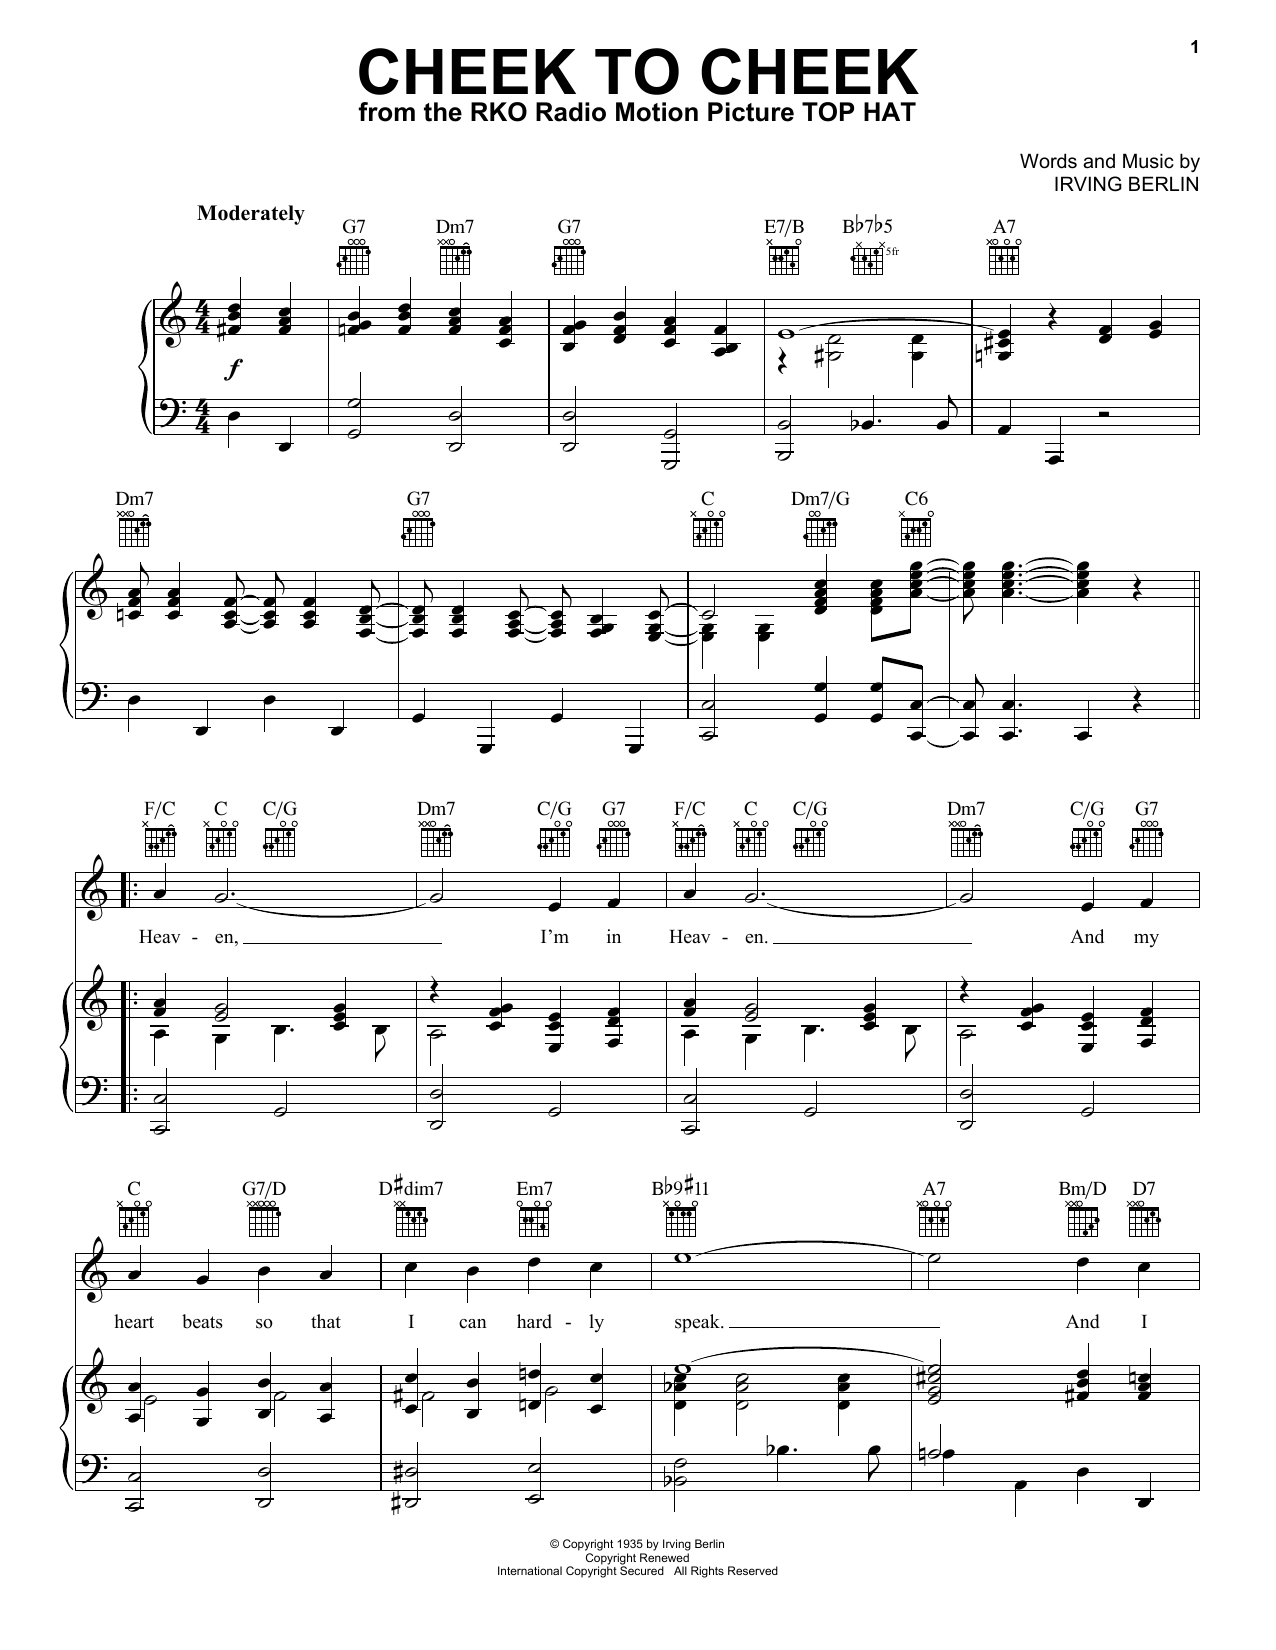 Irving Berlin Cheek To Cheek Sheet Music Notes & Chords for Viola - Download or Print PDF